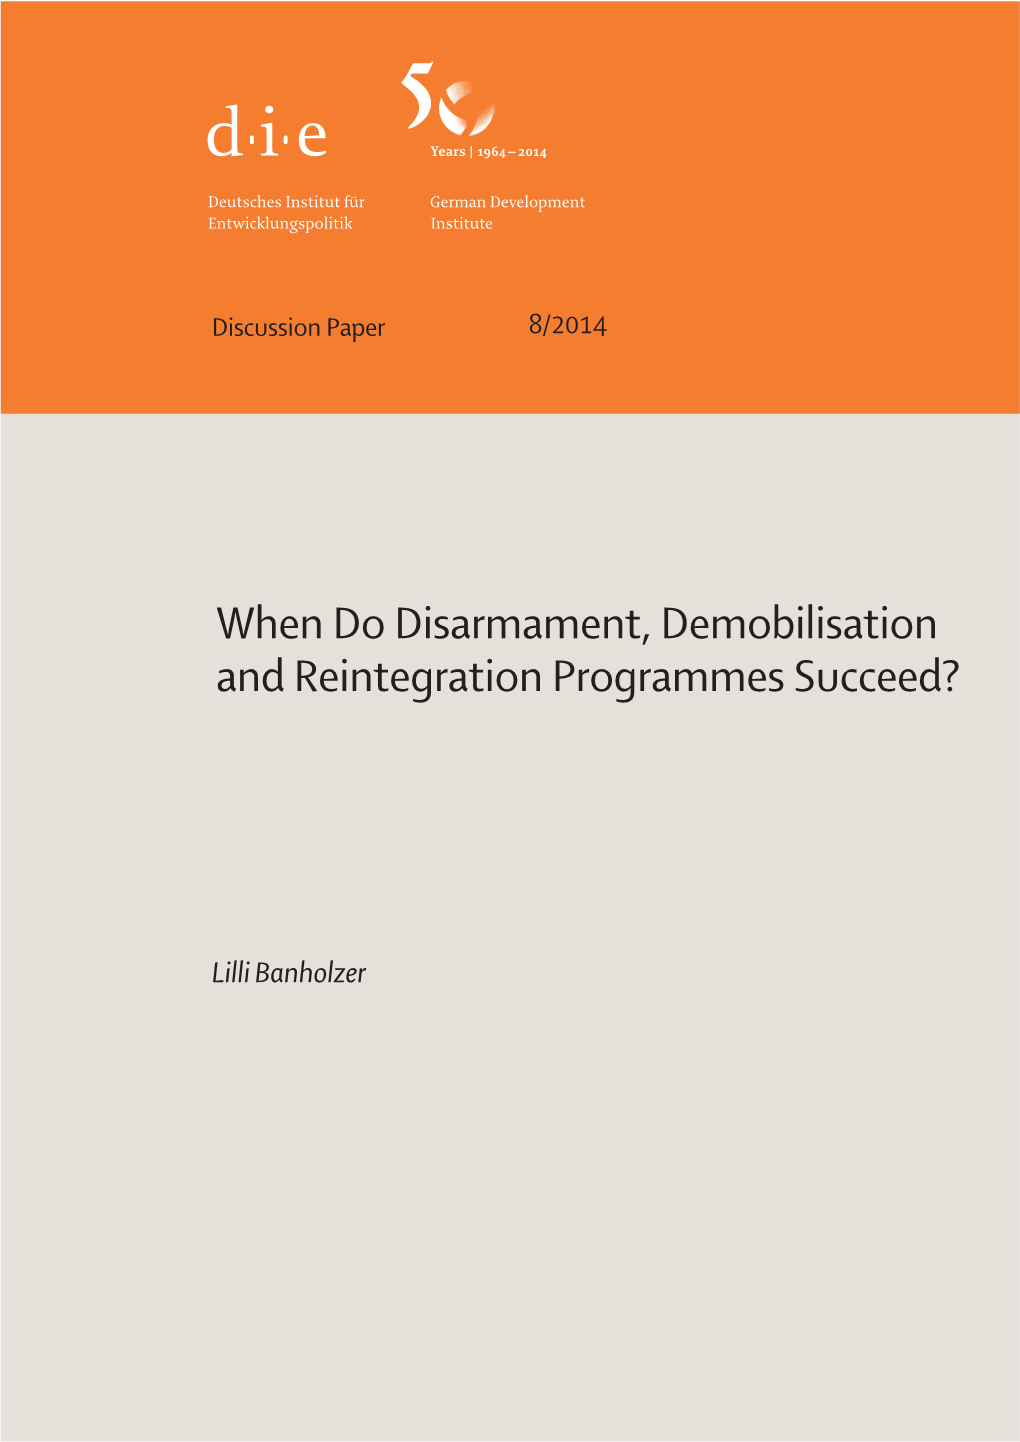 When Do Disarmament, Demobilisation and Reintegration Programmes Succeed?